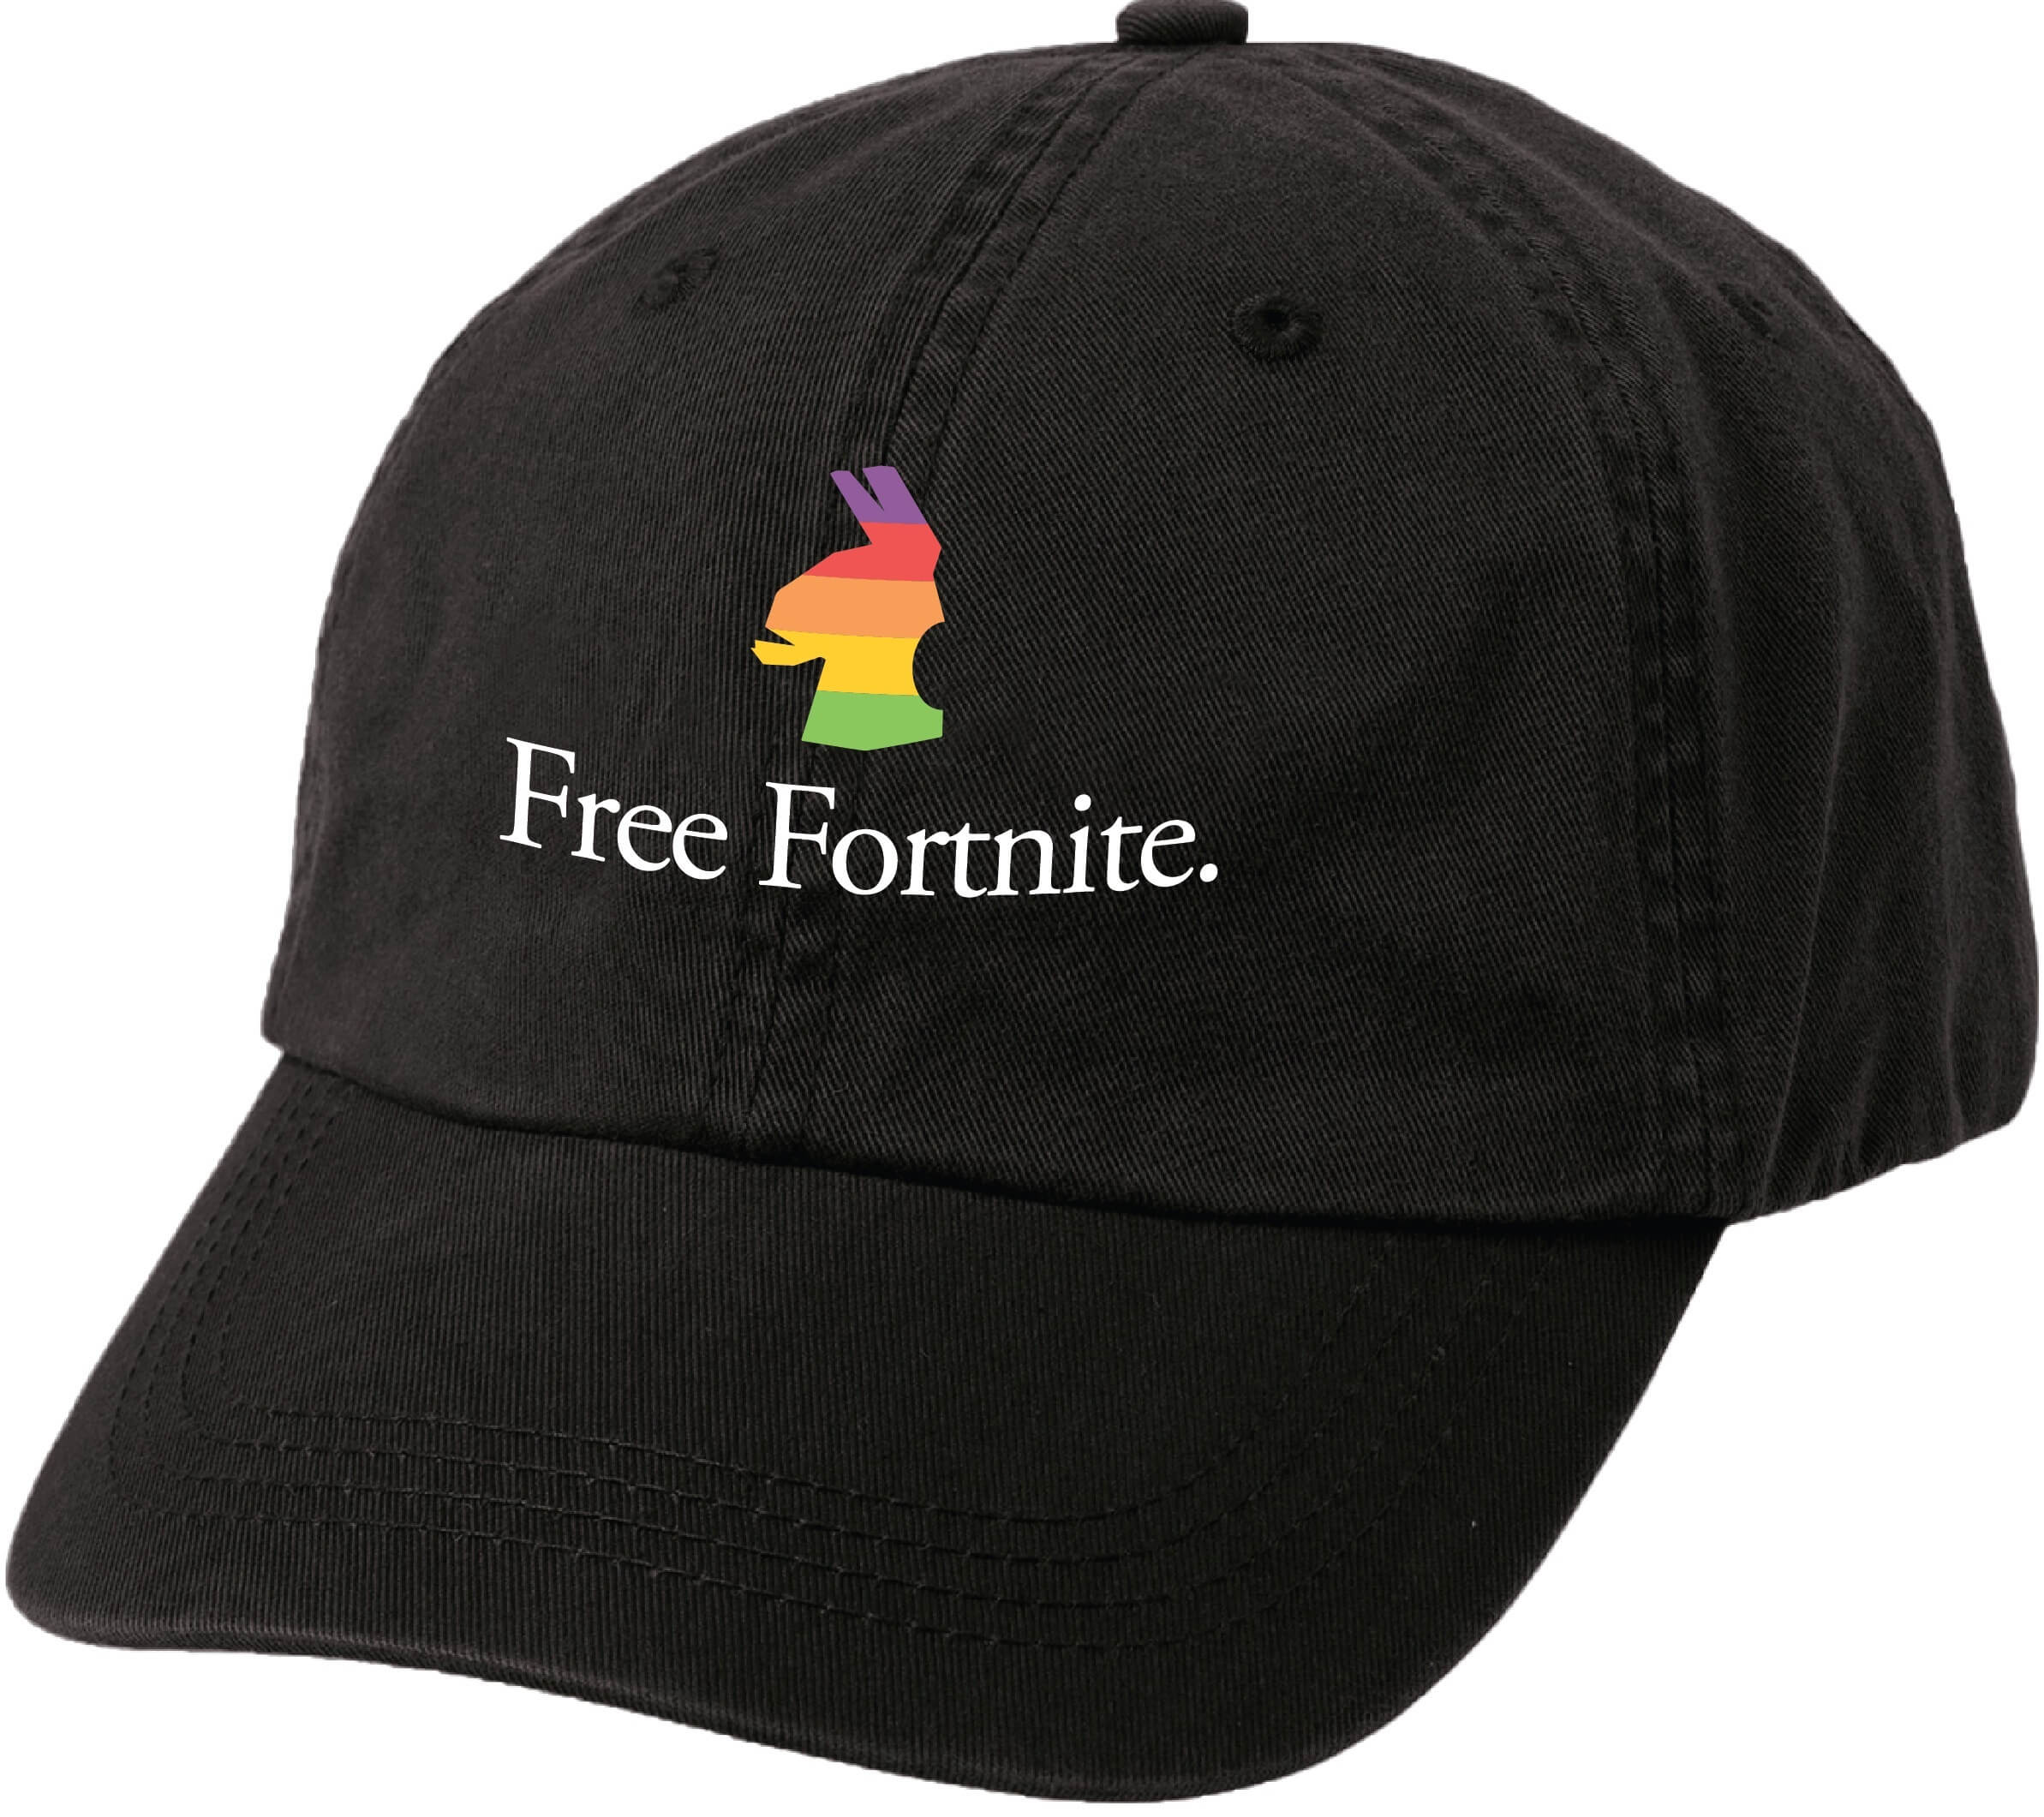 Fortnite hat